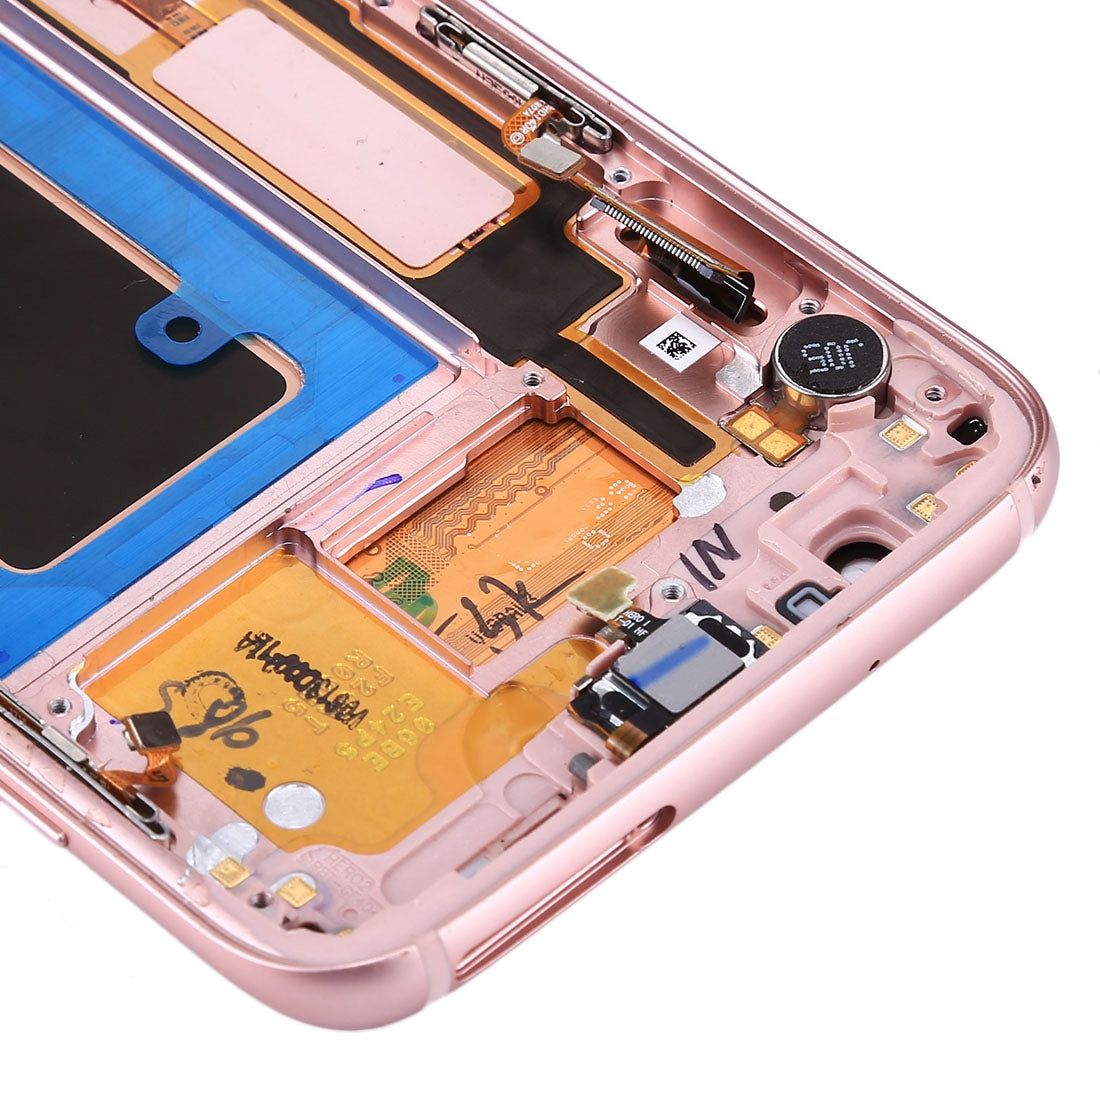 Pantalla Completa + Tactil + Marco Samsung Galaxy S7 Edge / G935F Rosa